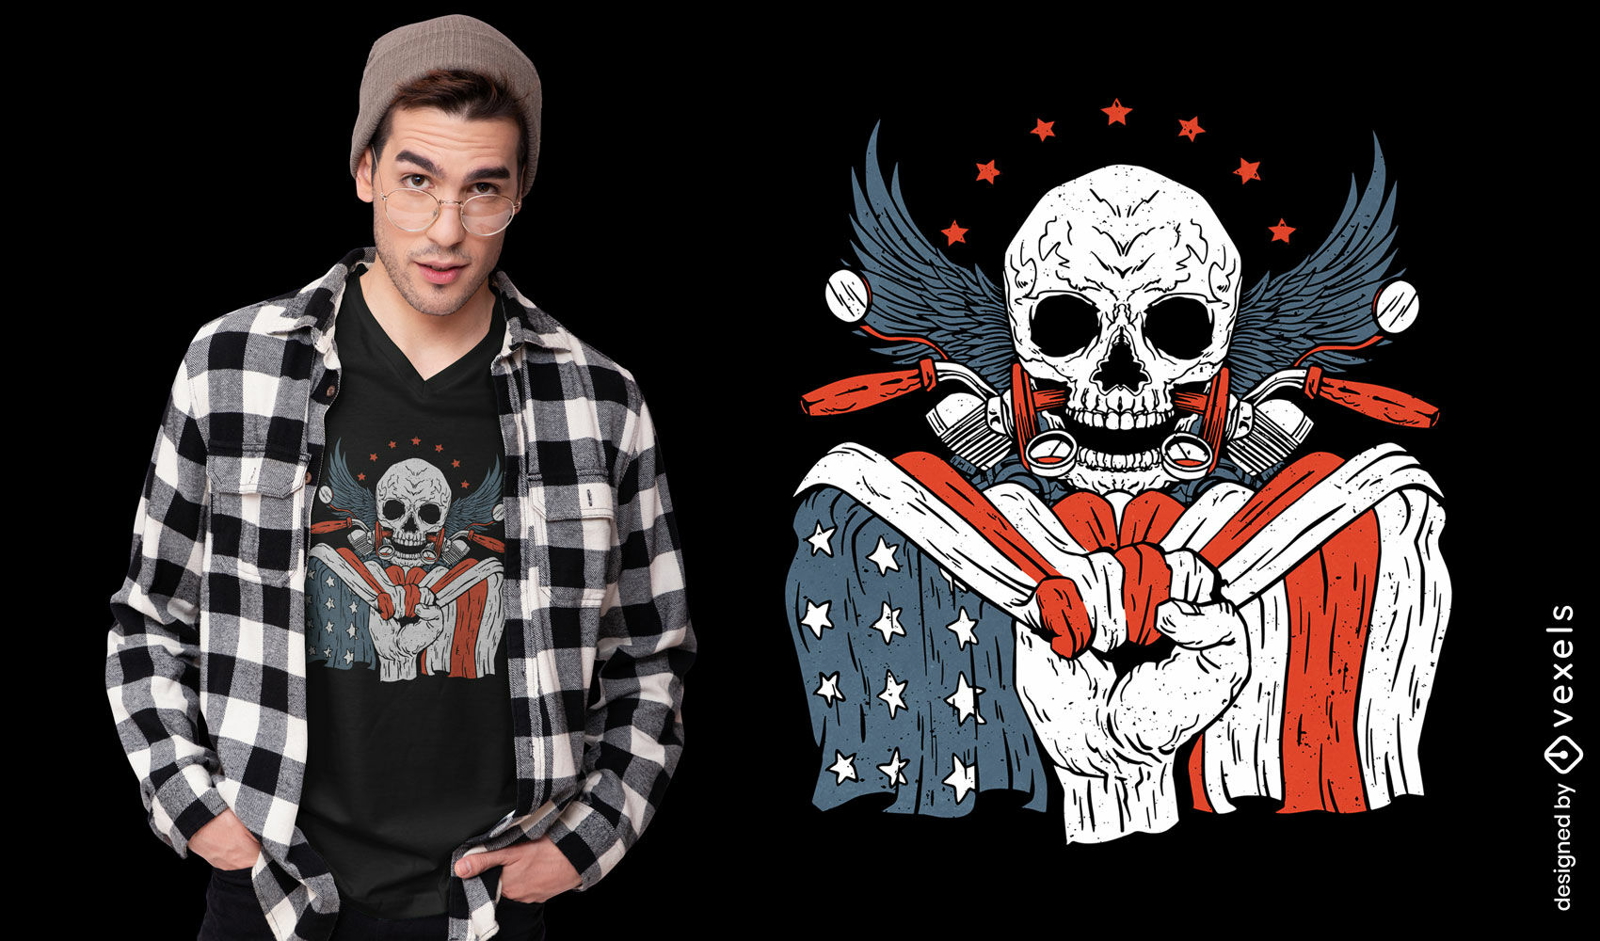 American flag and skull t-shirt design